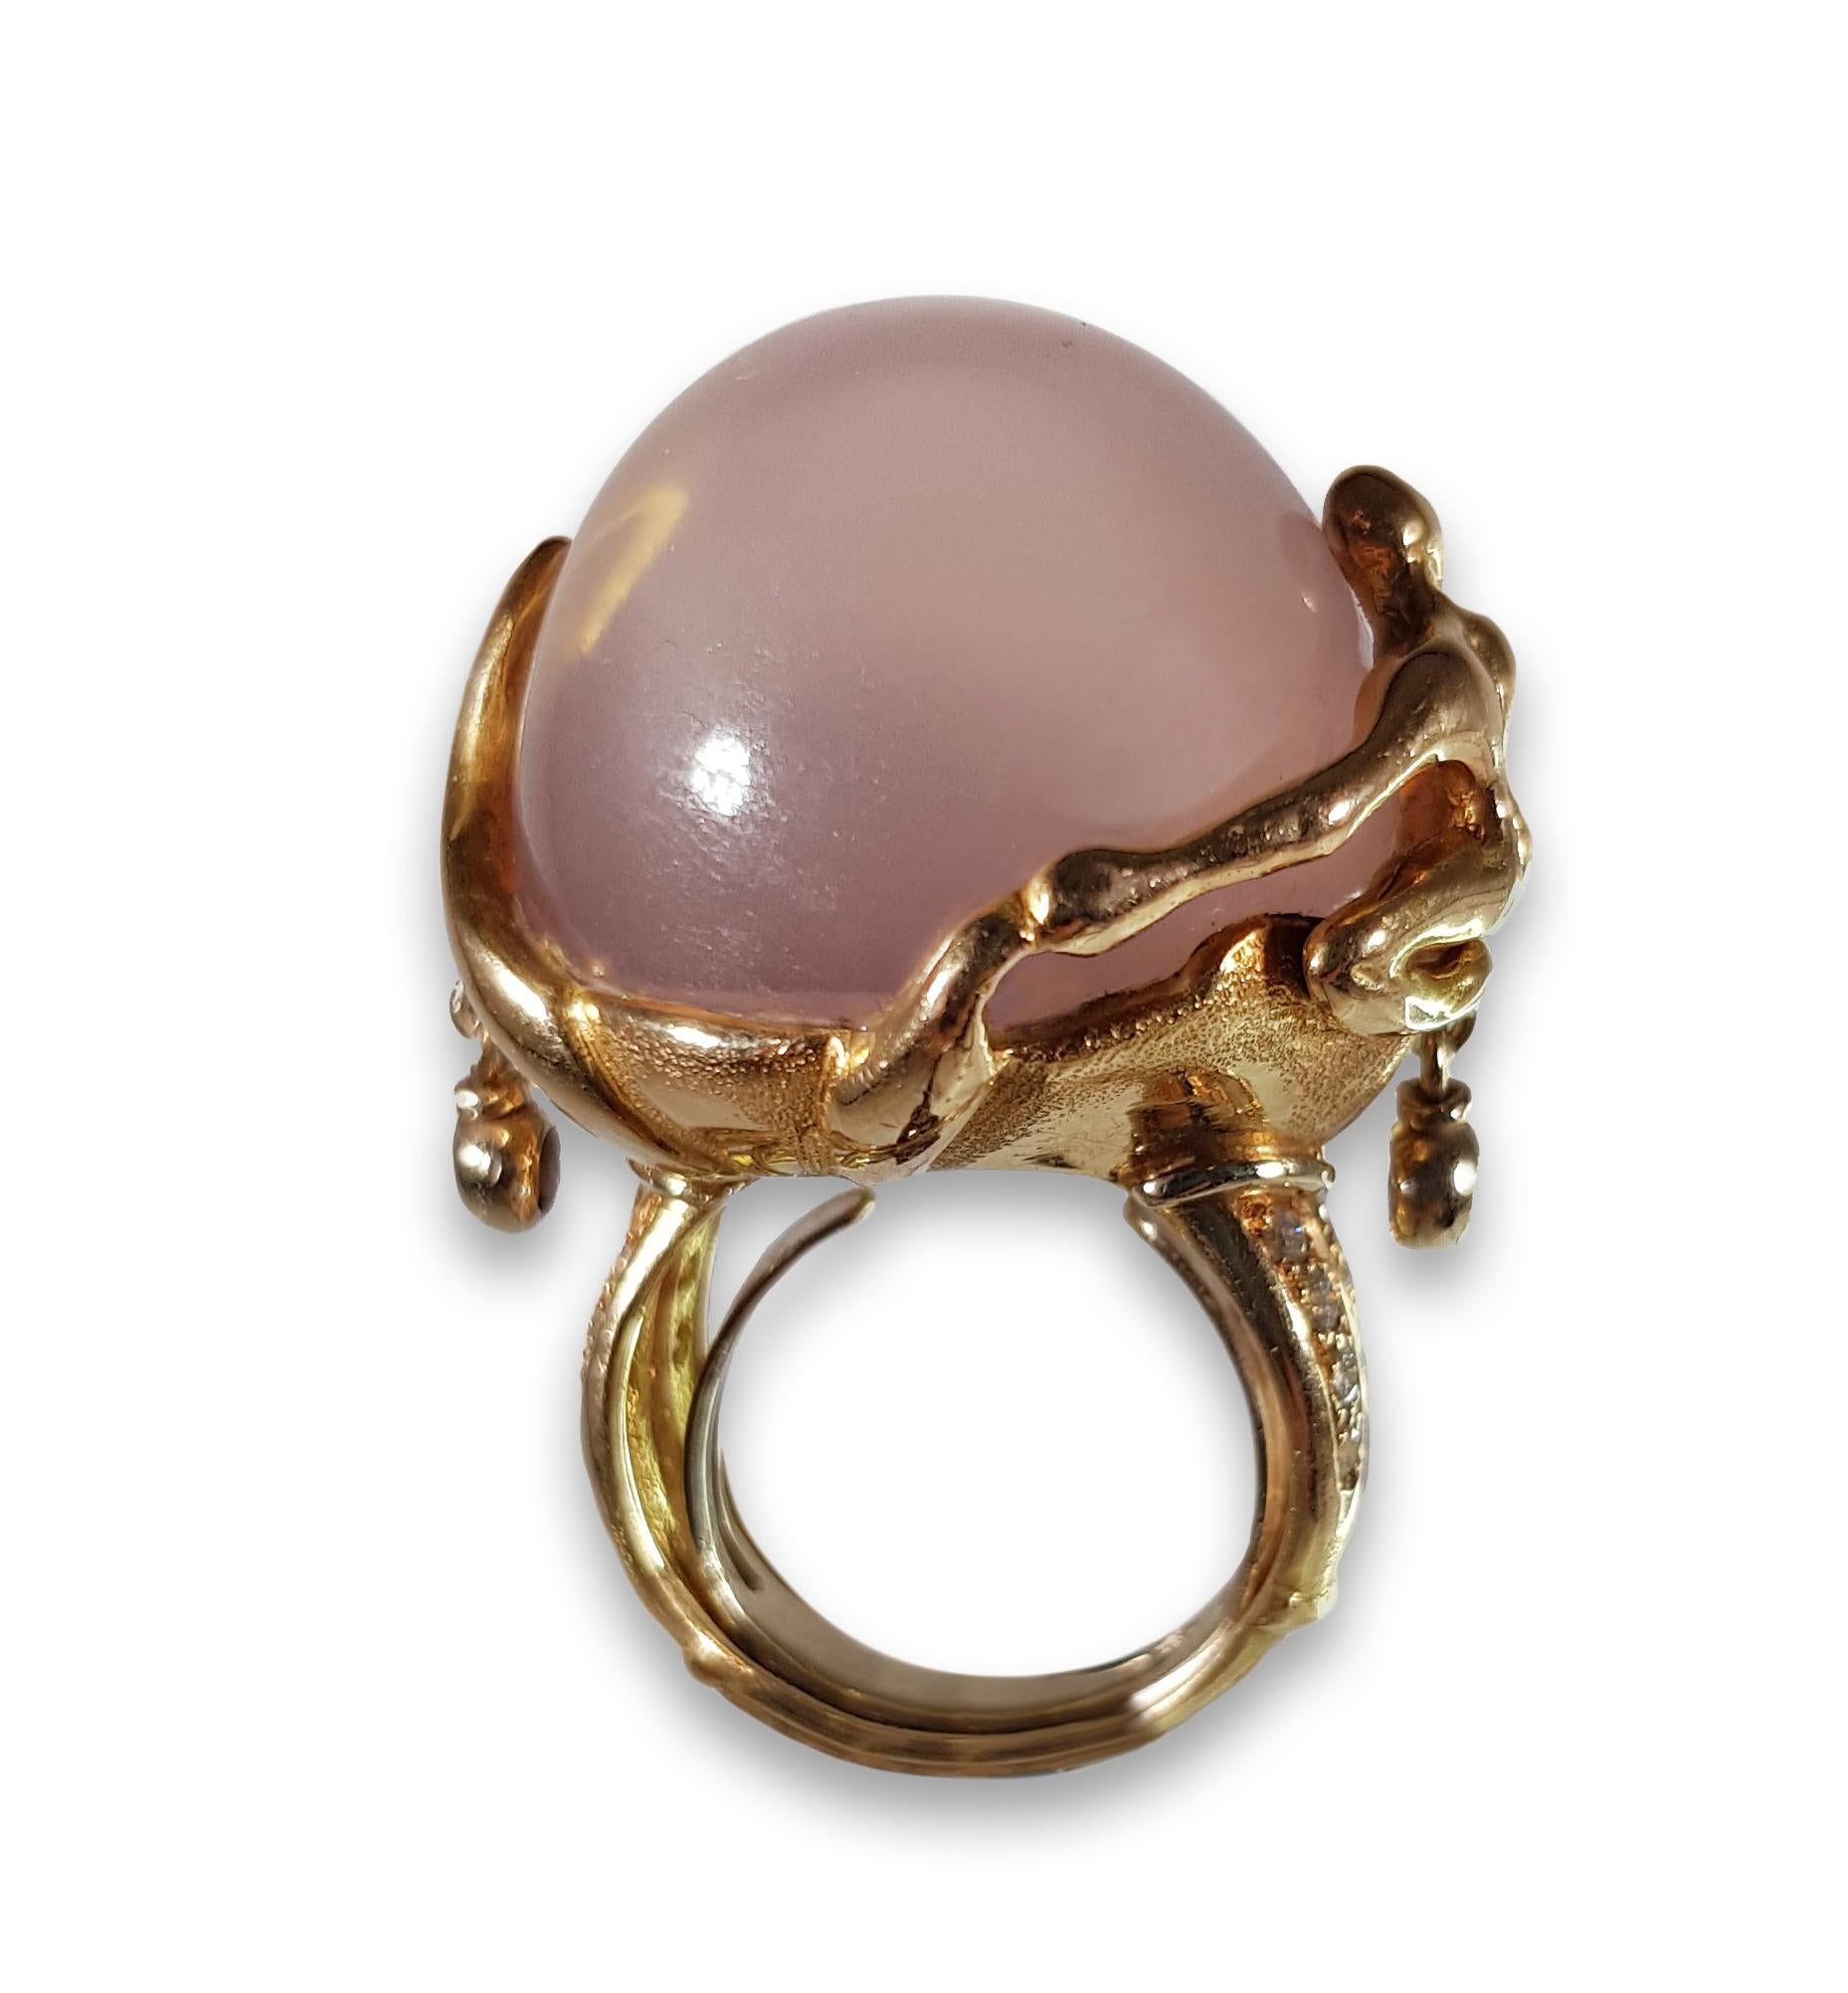 Unique Helen Yarmak Golden Ring With Diamonds And Big Round Pink Quartz, 